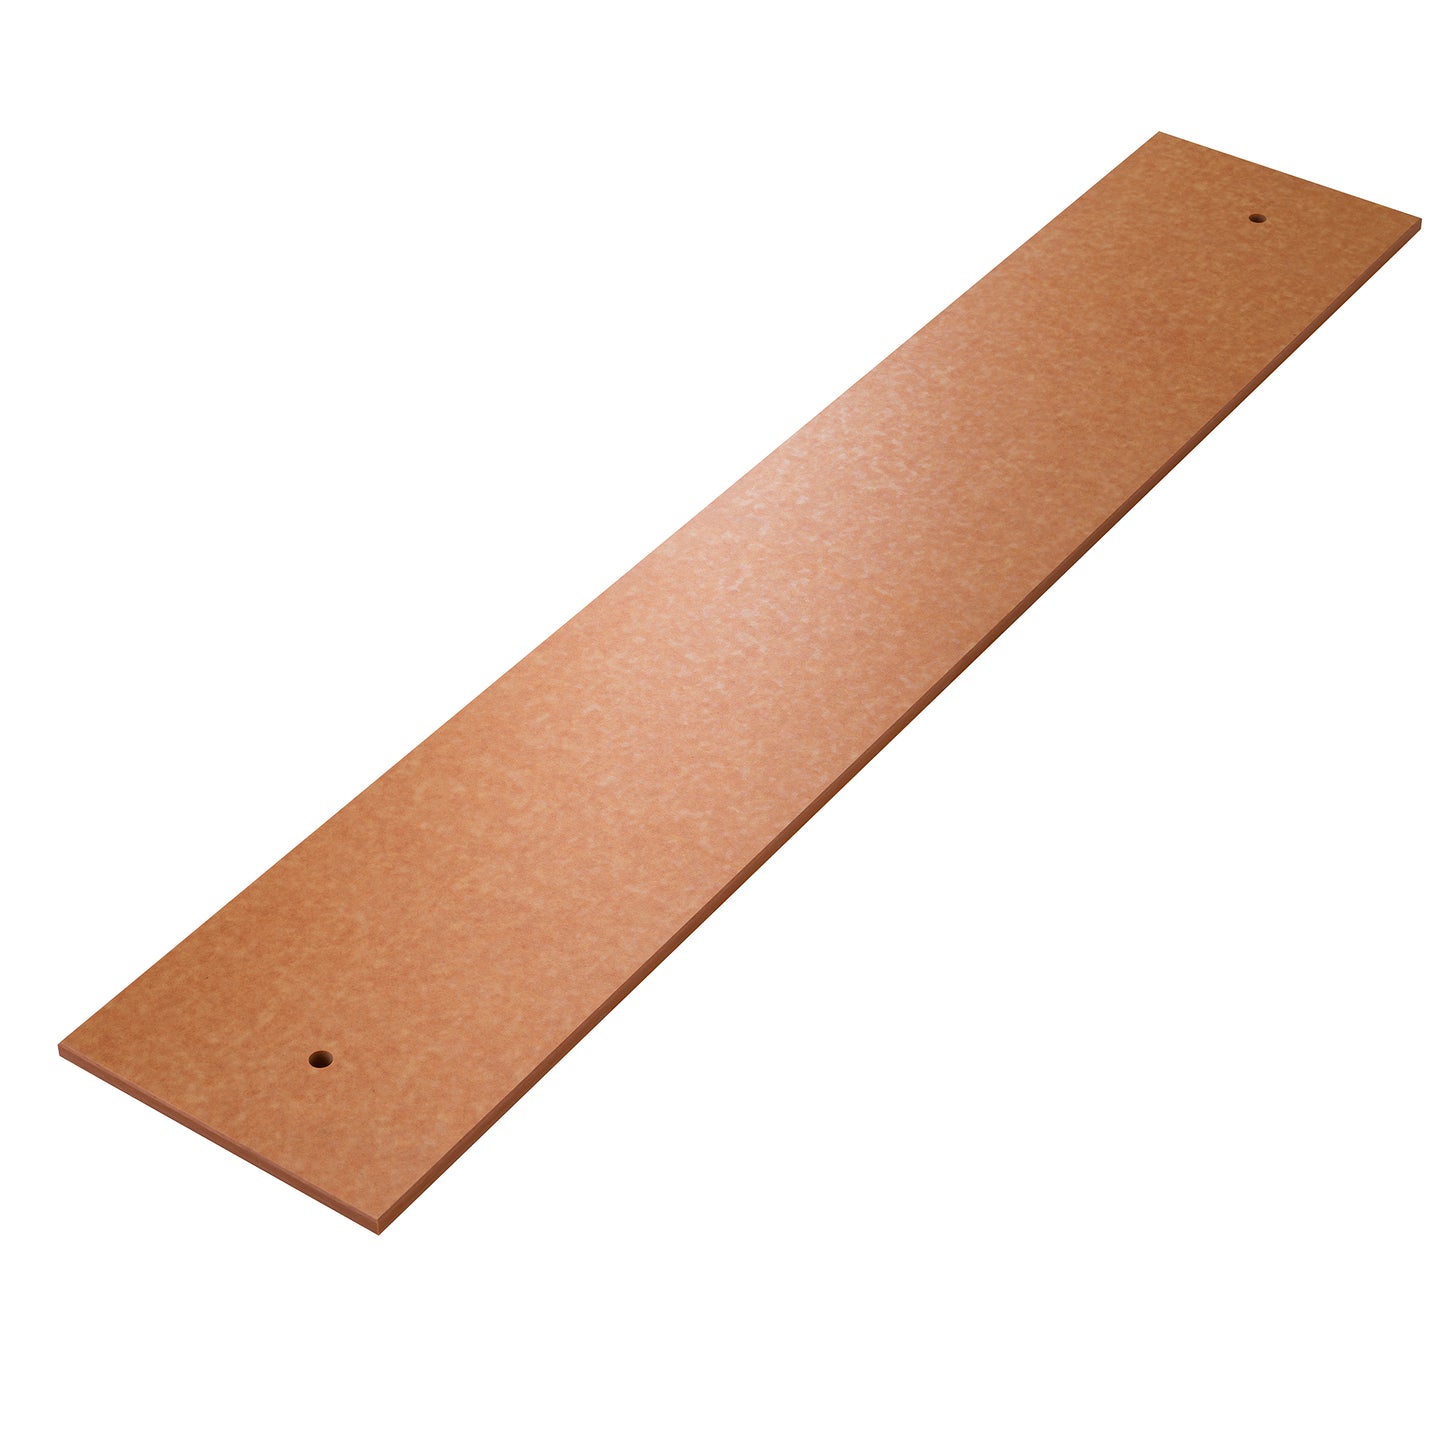 Composite wood-tone cutting board. 1/2" X 11-3/4" X 27-1/2". All TSSU-27 models.(SKU - 820609)